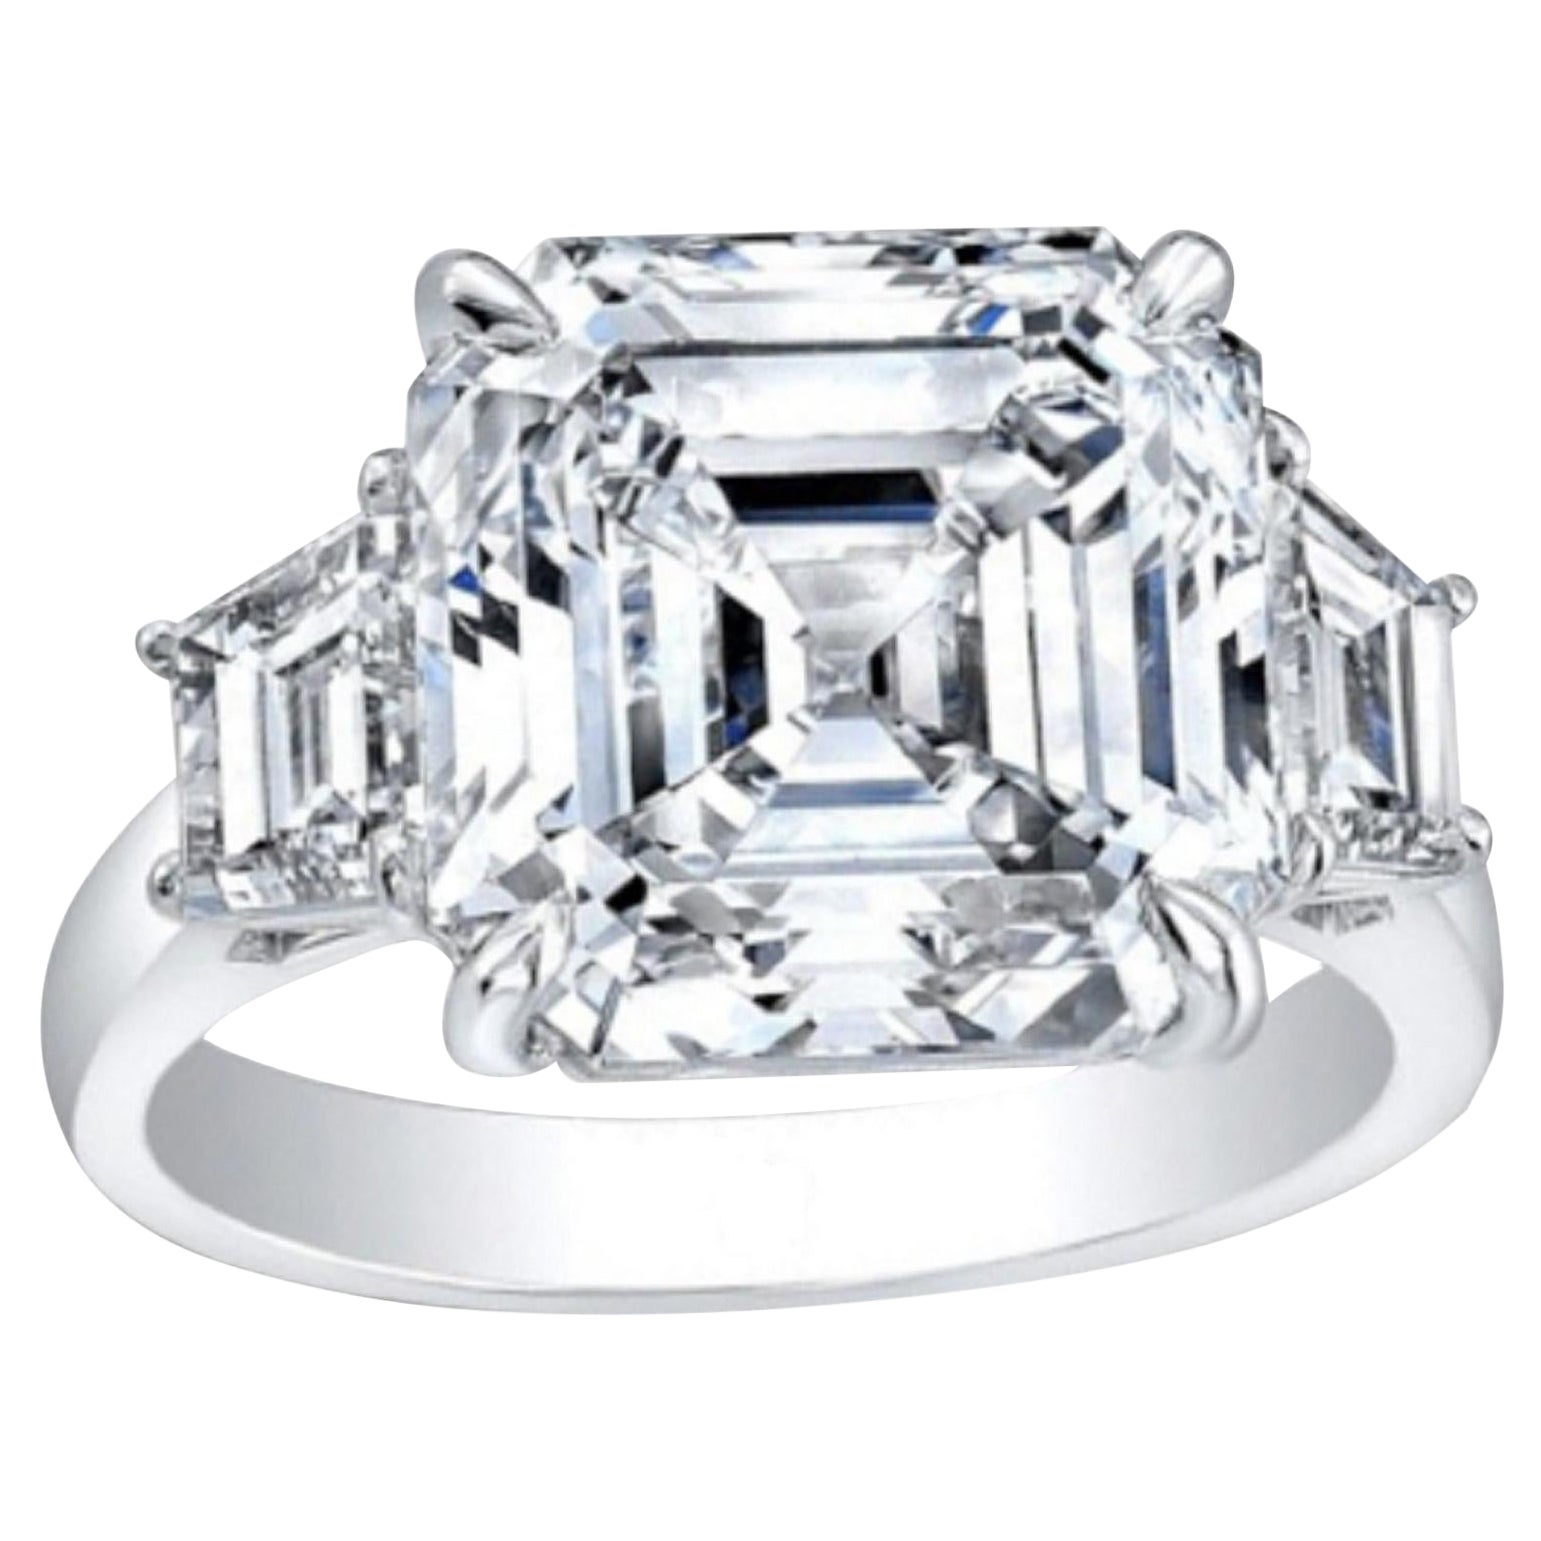 GIA Certified 4.01 Carat Asscher Cut Diamond 18K Gold Engagement Ring For Sale